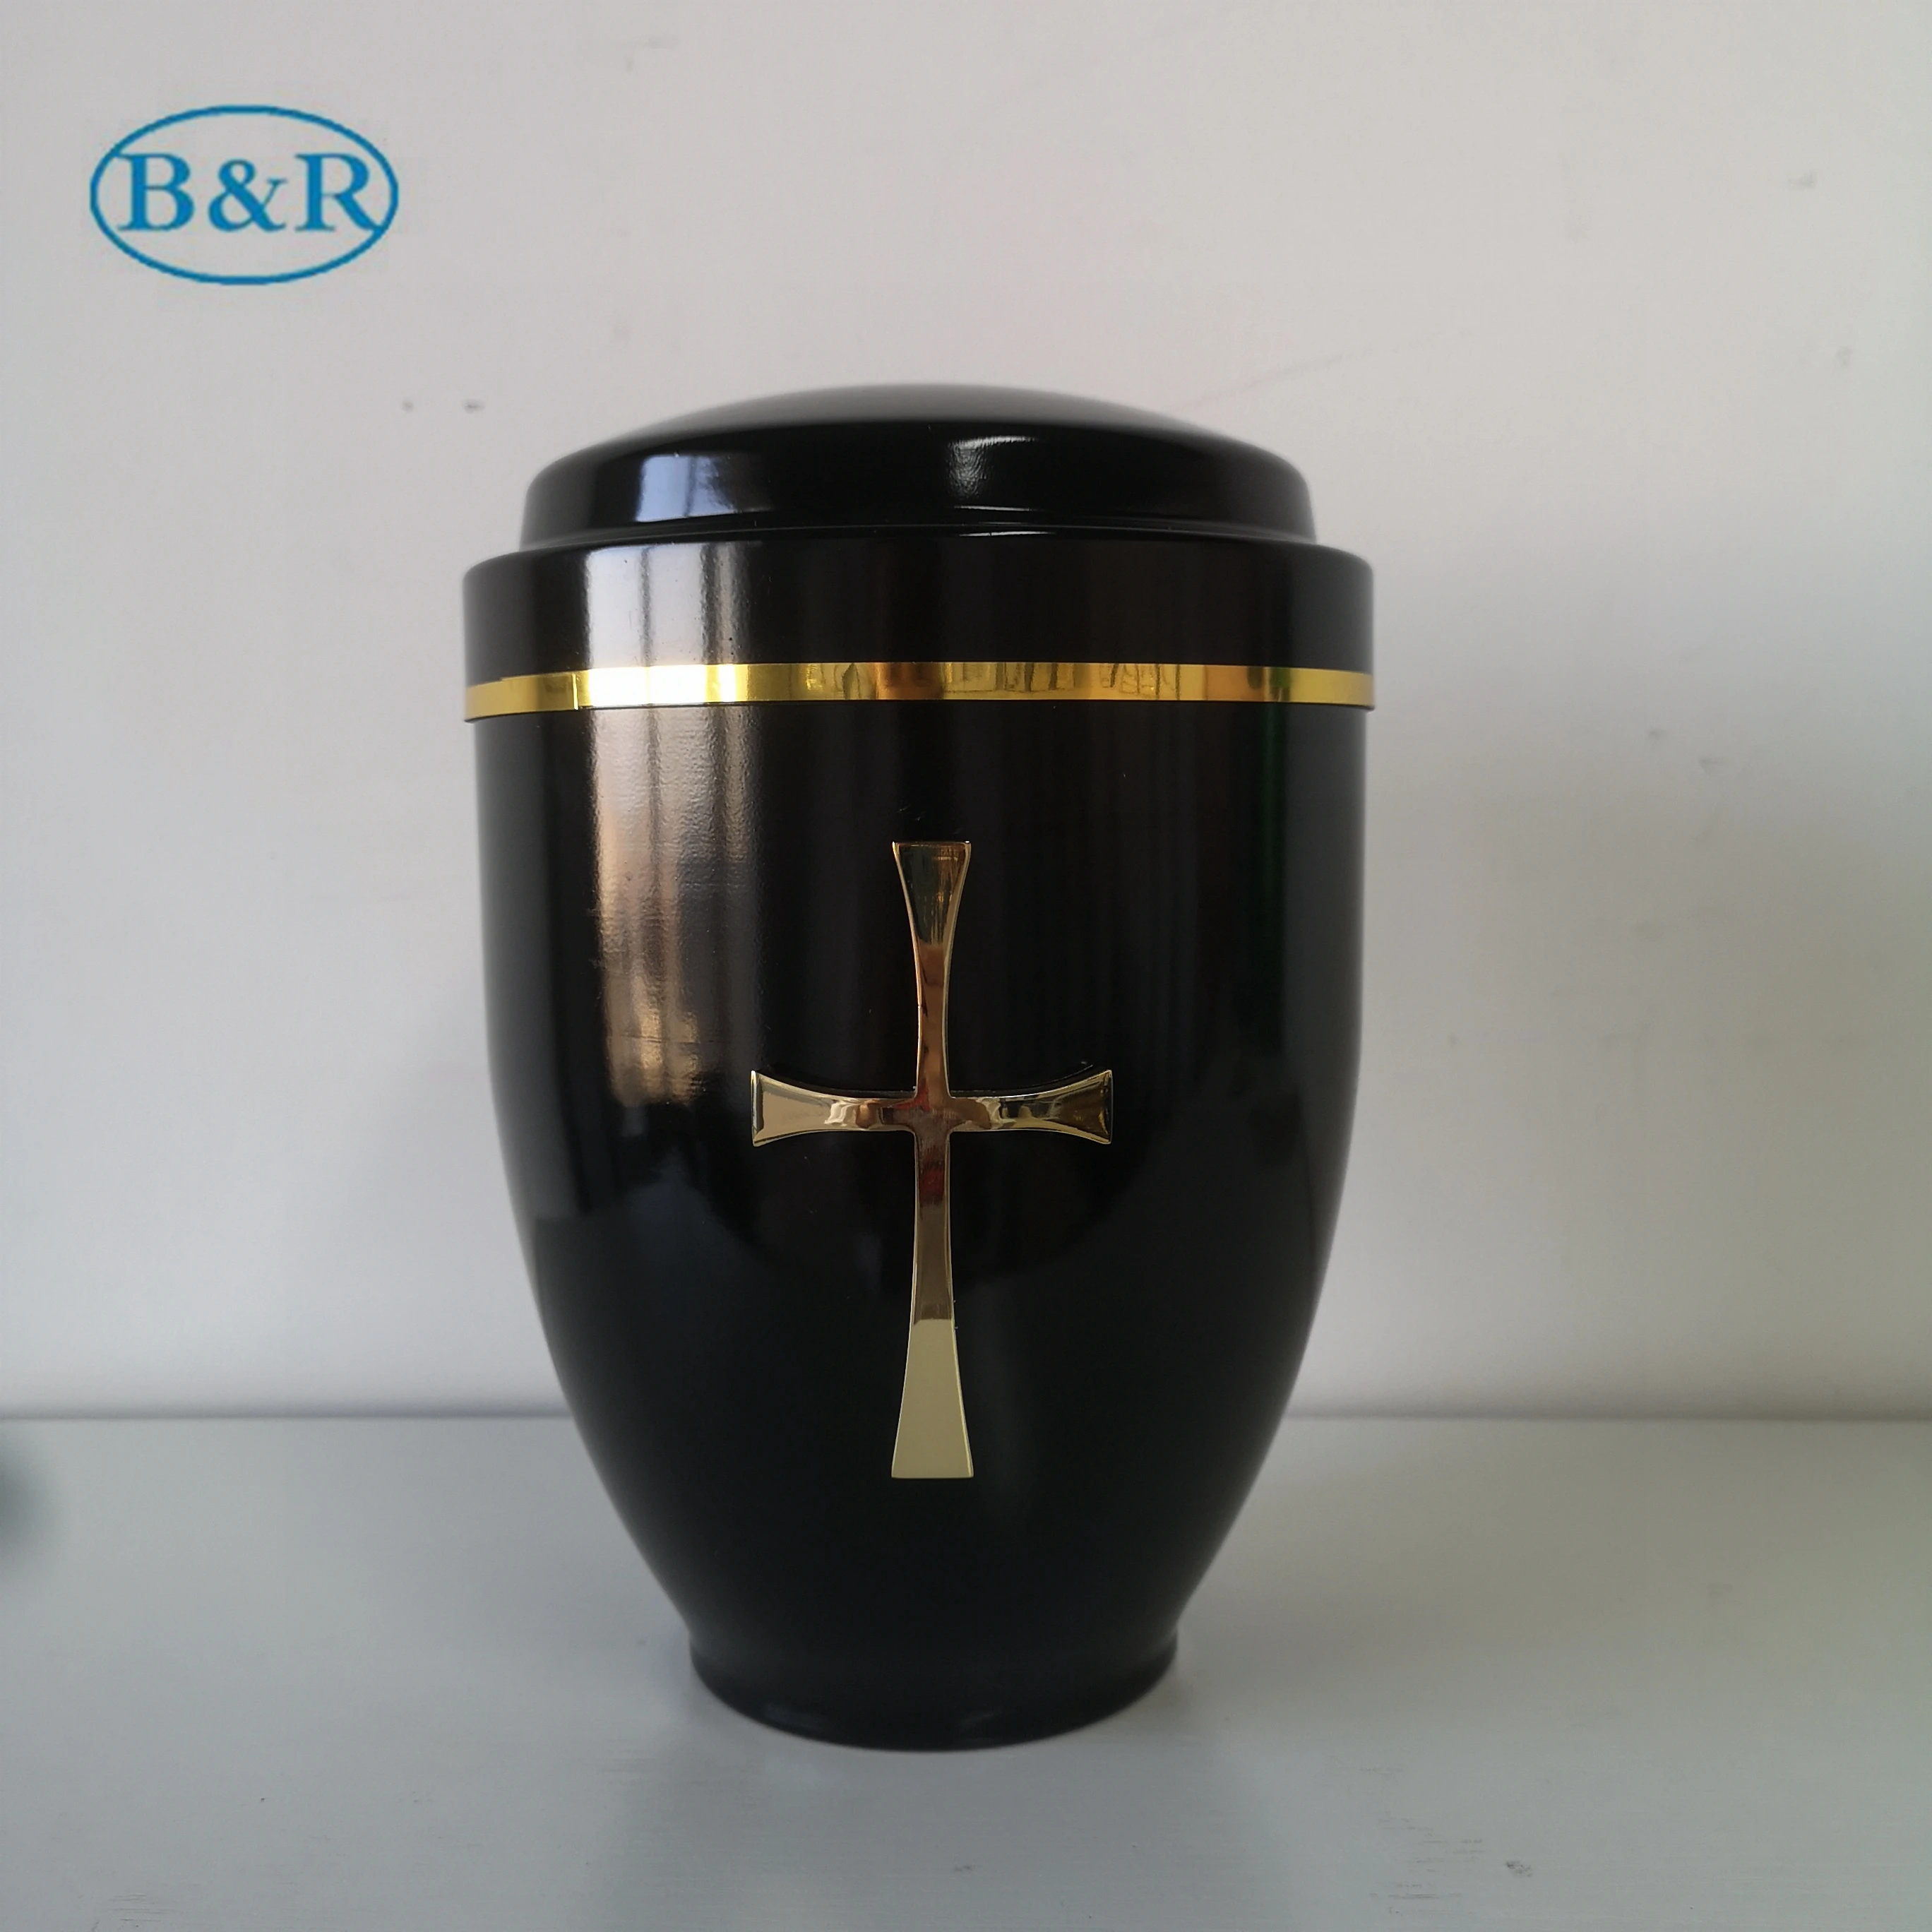 
U002 Nice quality funeral meta urn for human ashes 